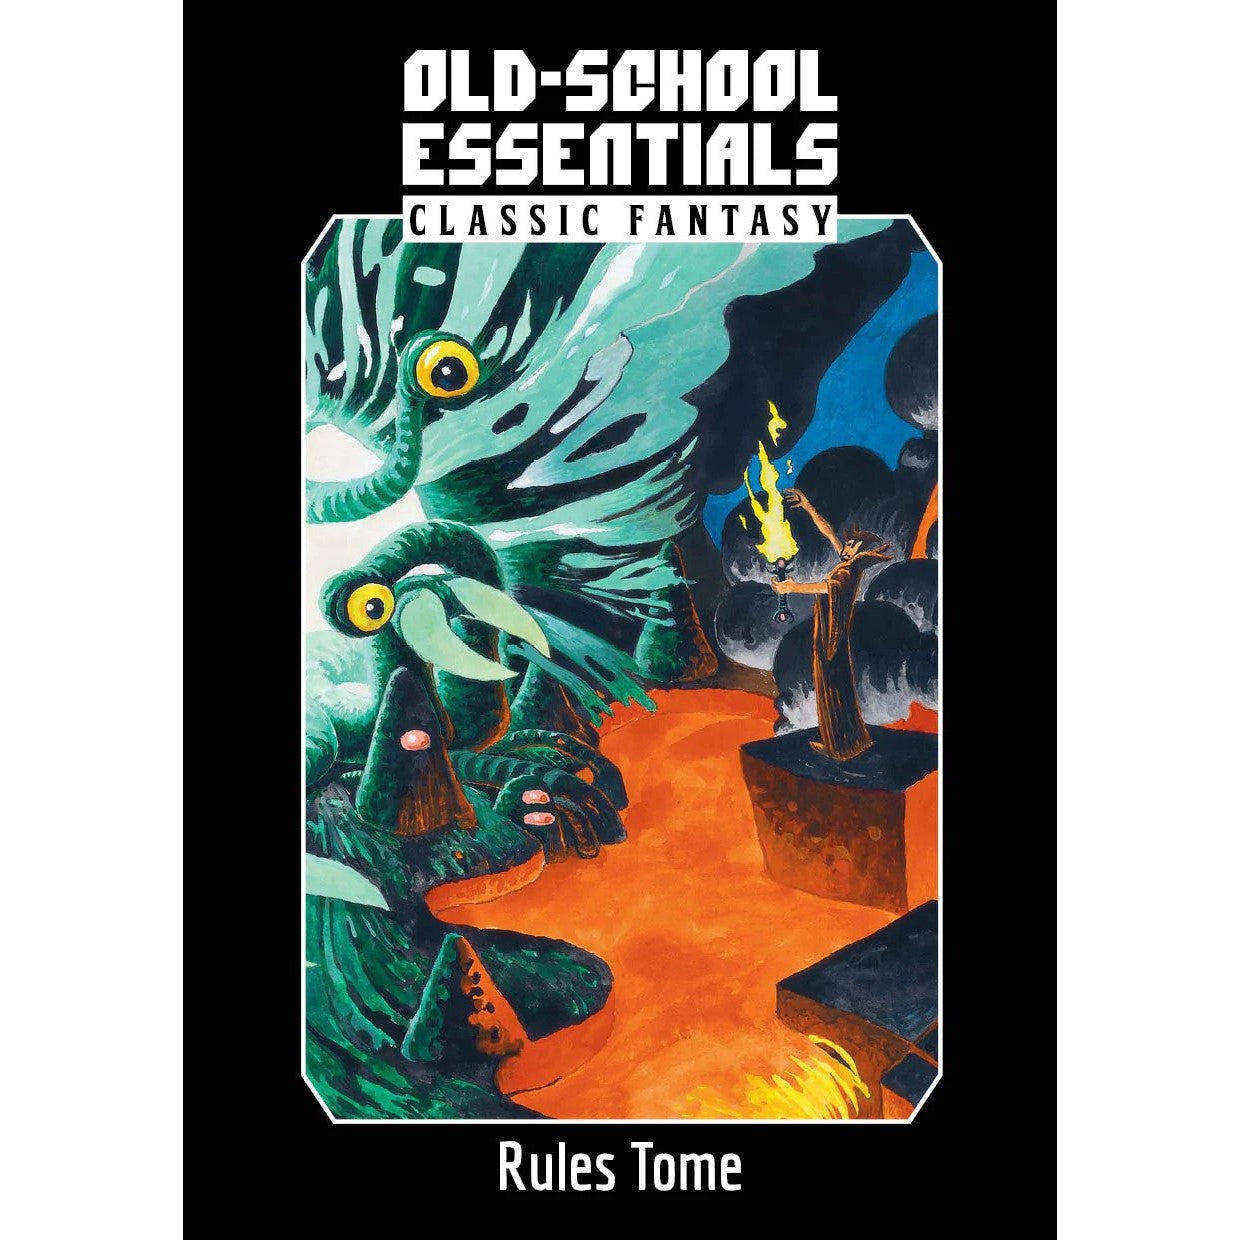 Old-School Essentials Classic Fantasy Rules Tome